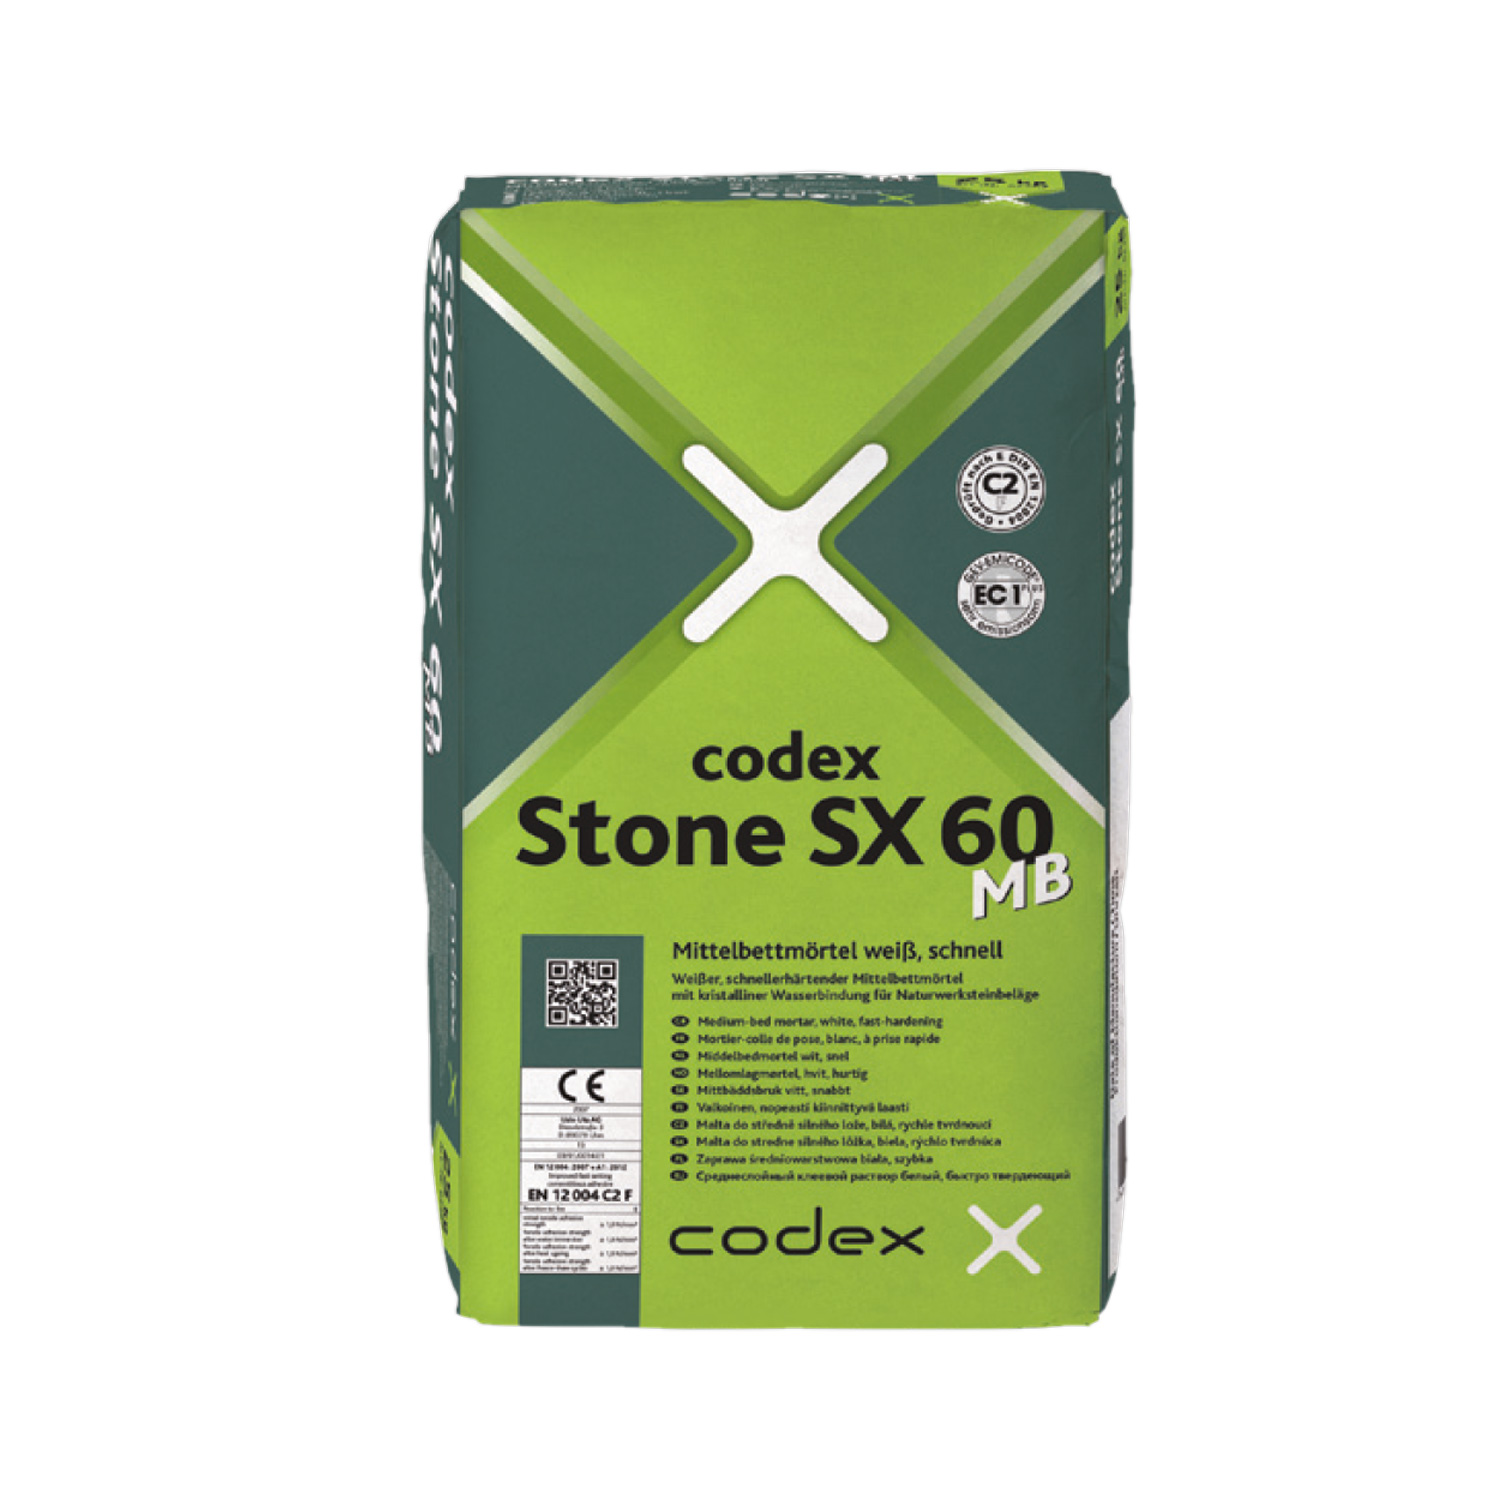 codex Stone SX 60 Mittelbettmörtel, 25kg Sack